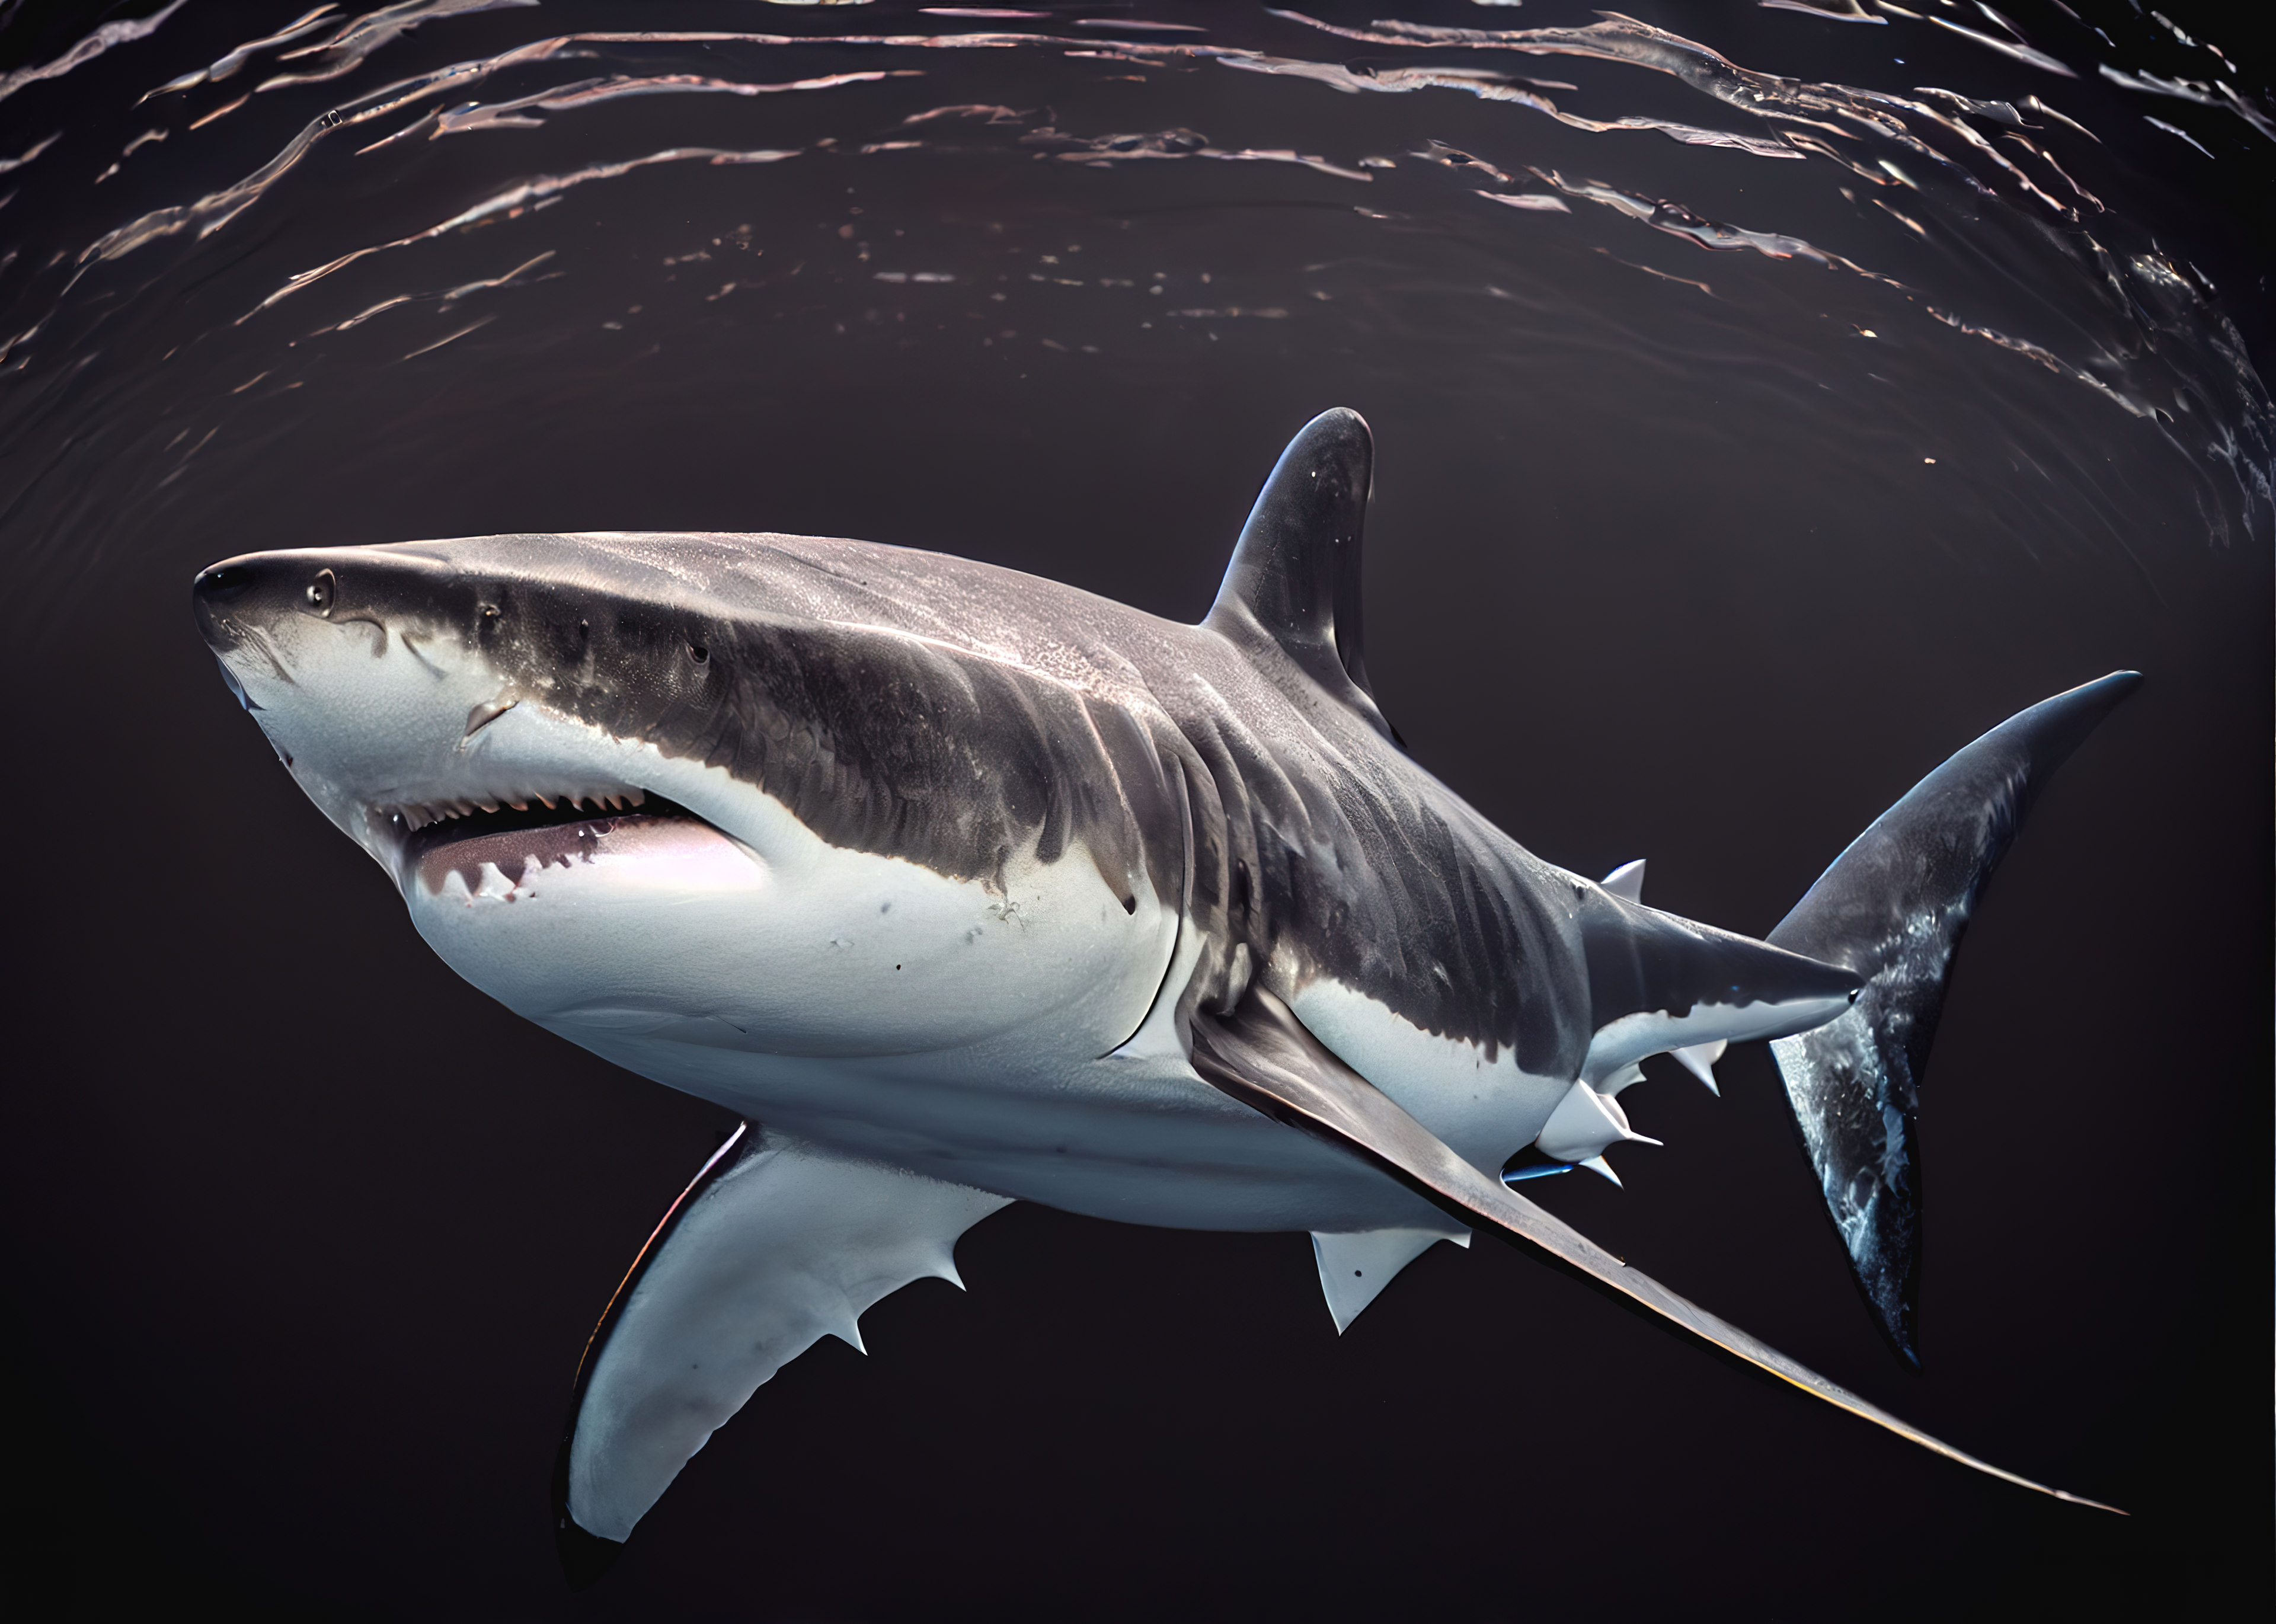 34 Hd Sharks Images, Stock Photos & Vectors | Shutterstock